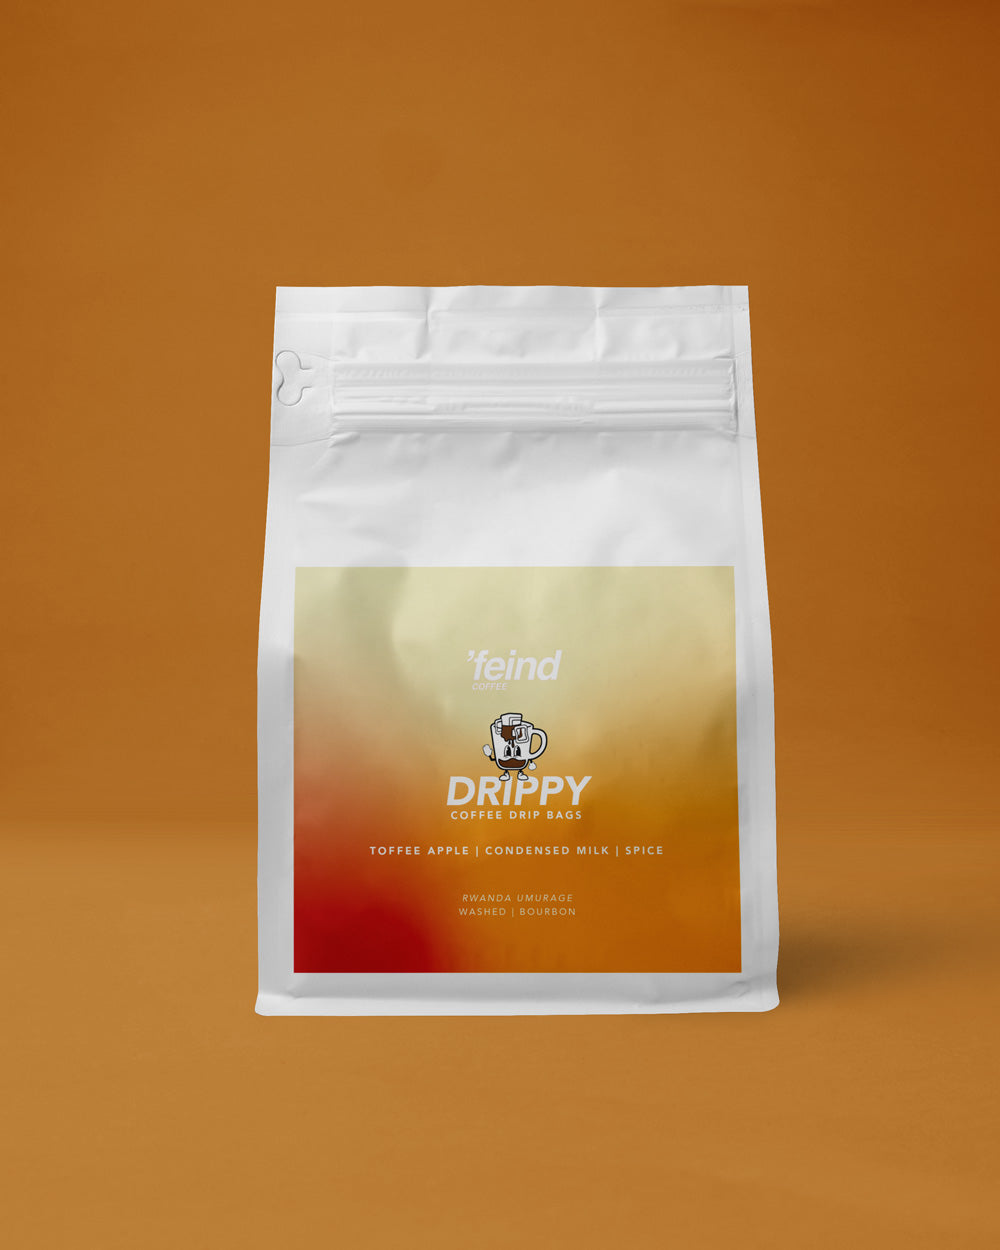 Rwanda Umurage | Single Origin Coffee Drip Bags